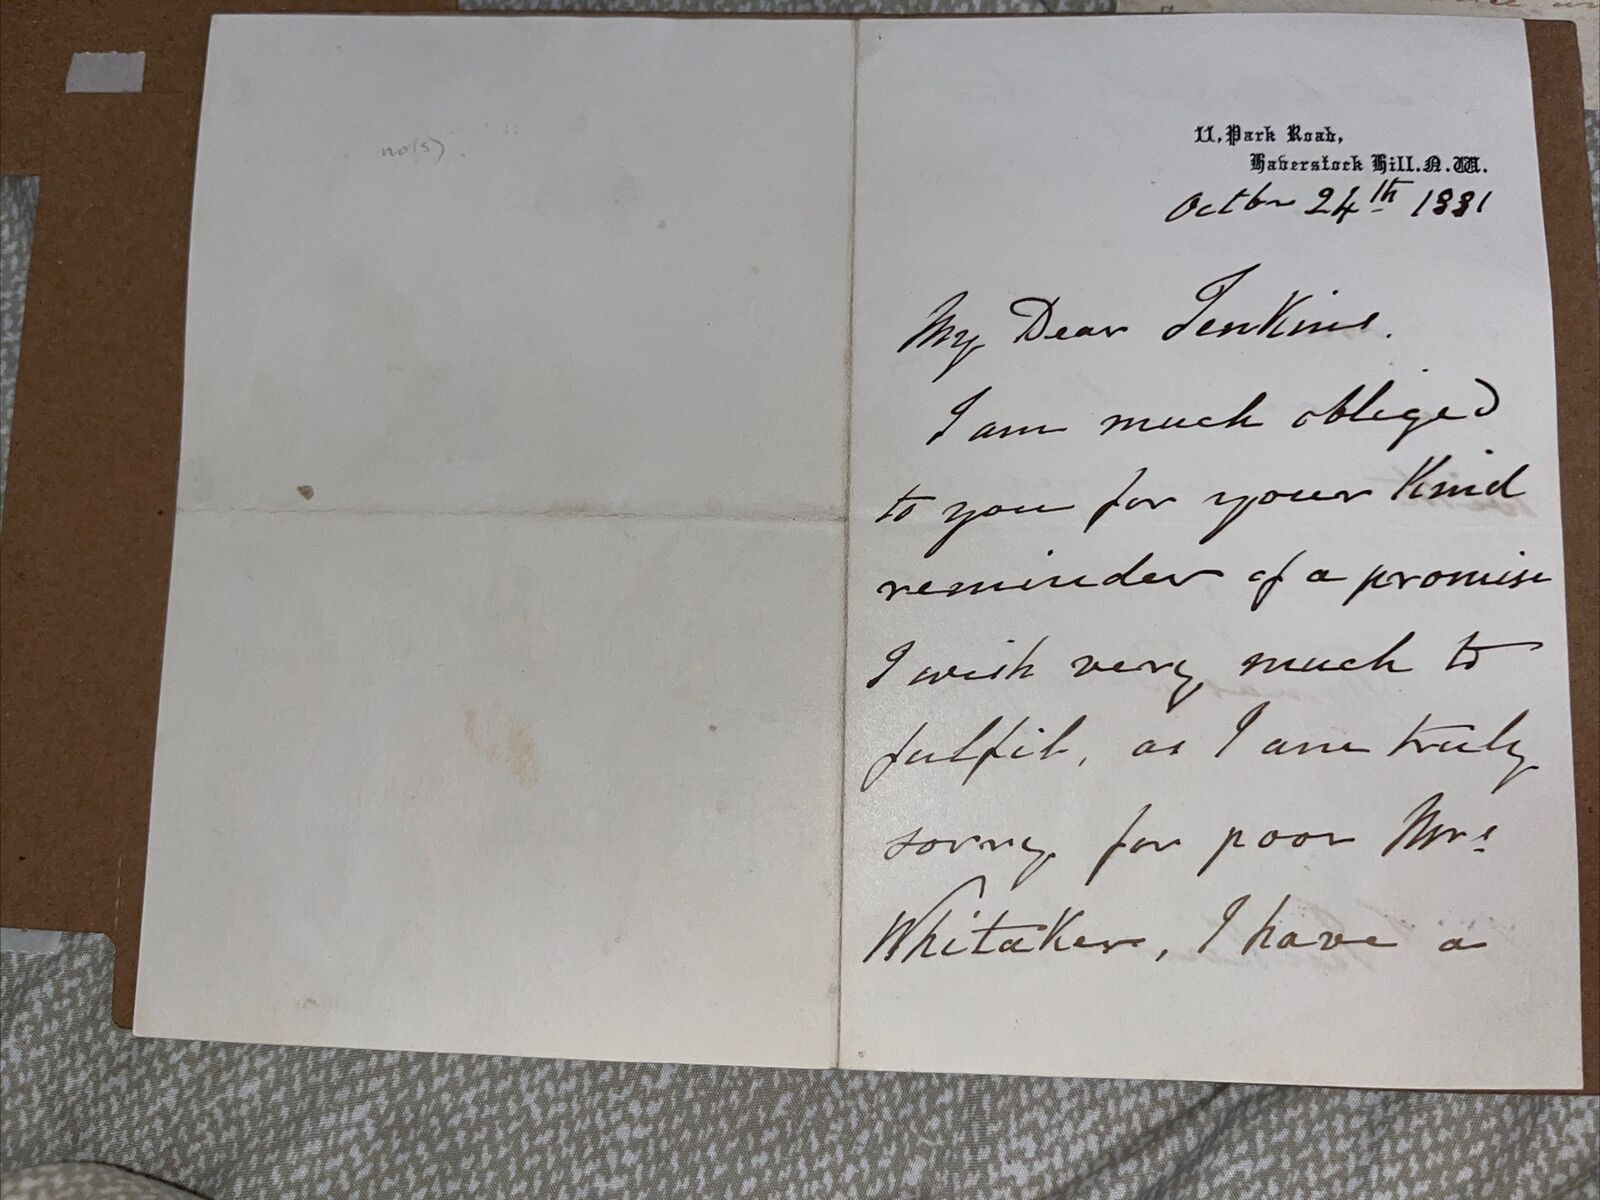 1881 Antique Letter from British Landscape Artist Thomas Danby, Mentions Sketch